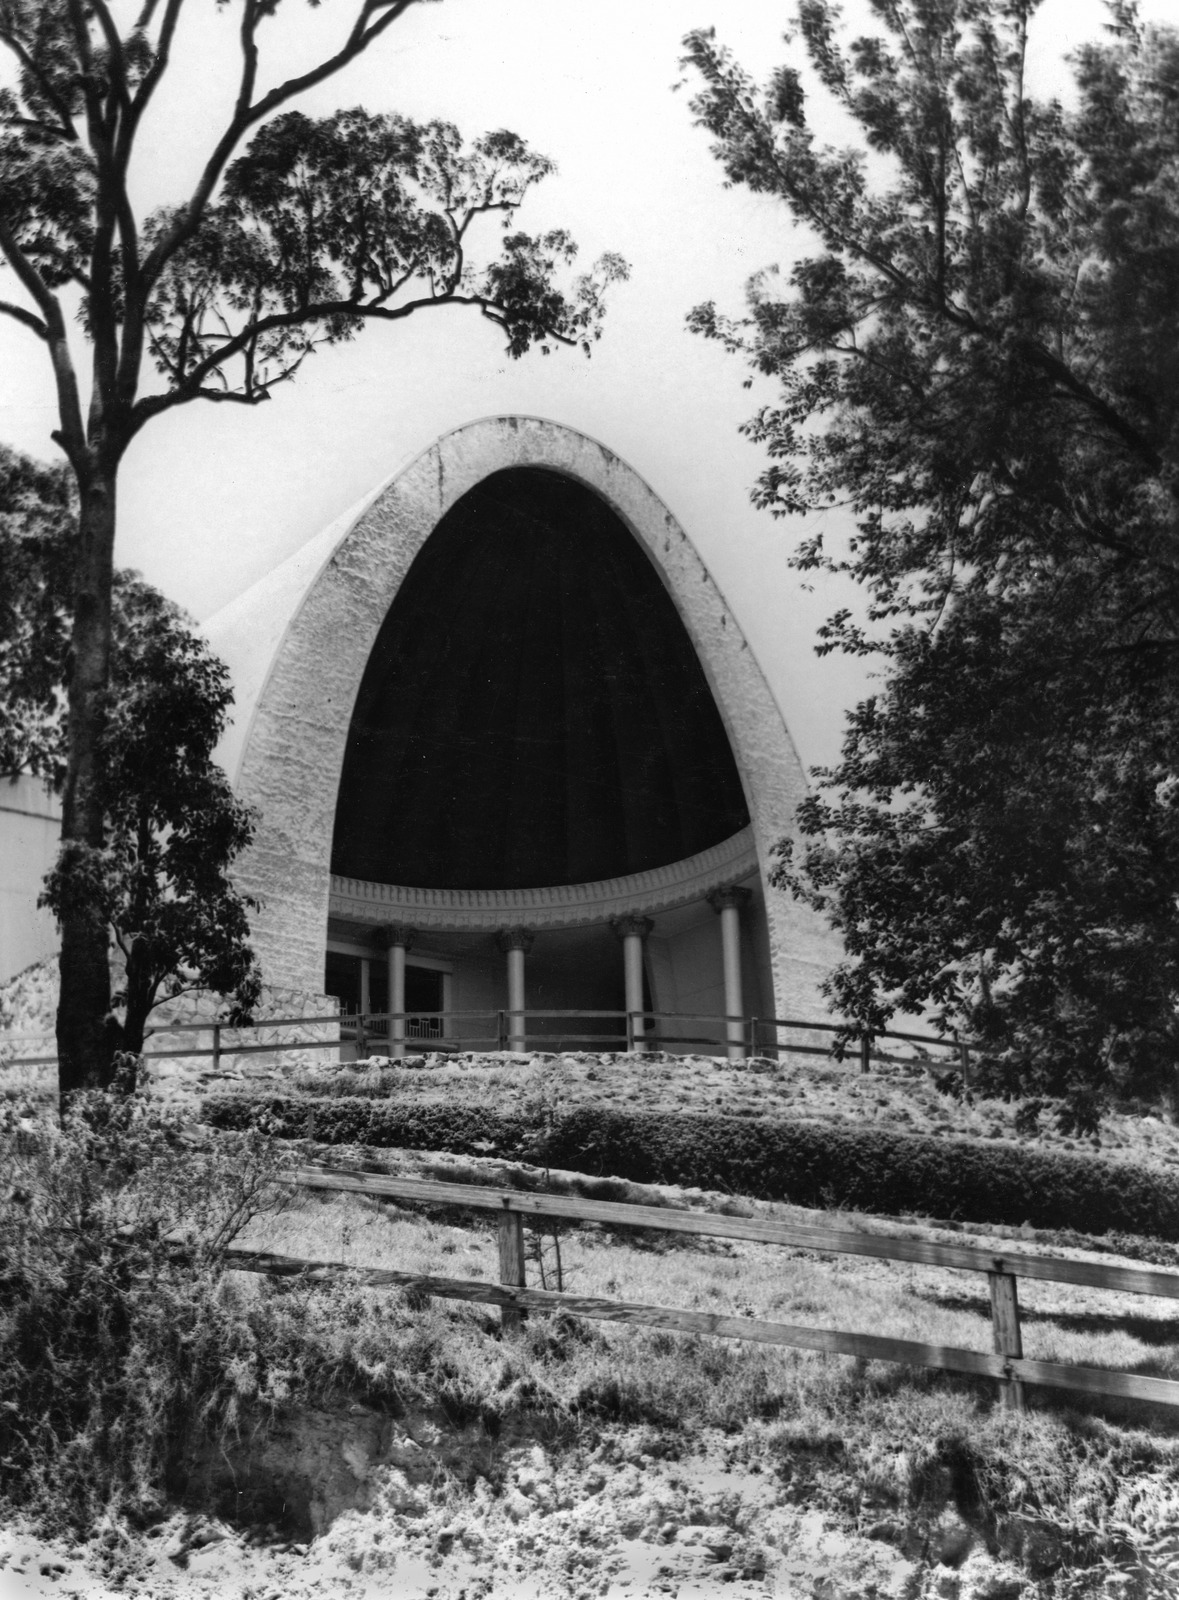 Entrance to the Cloudland Ballroom, Bowen Hills, Brisbane, 1946.